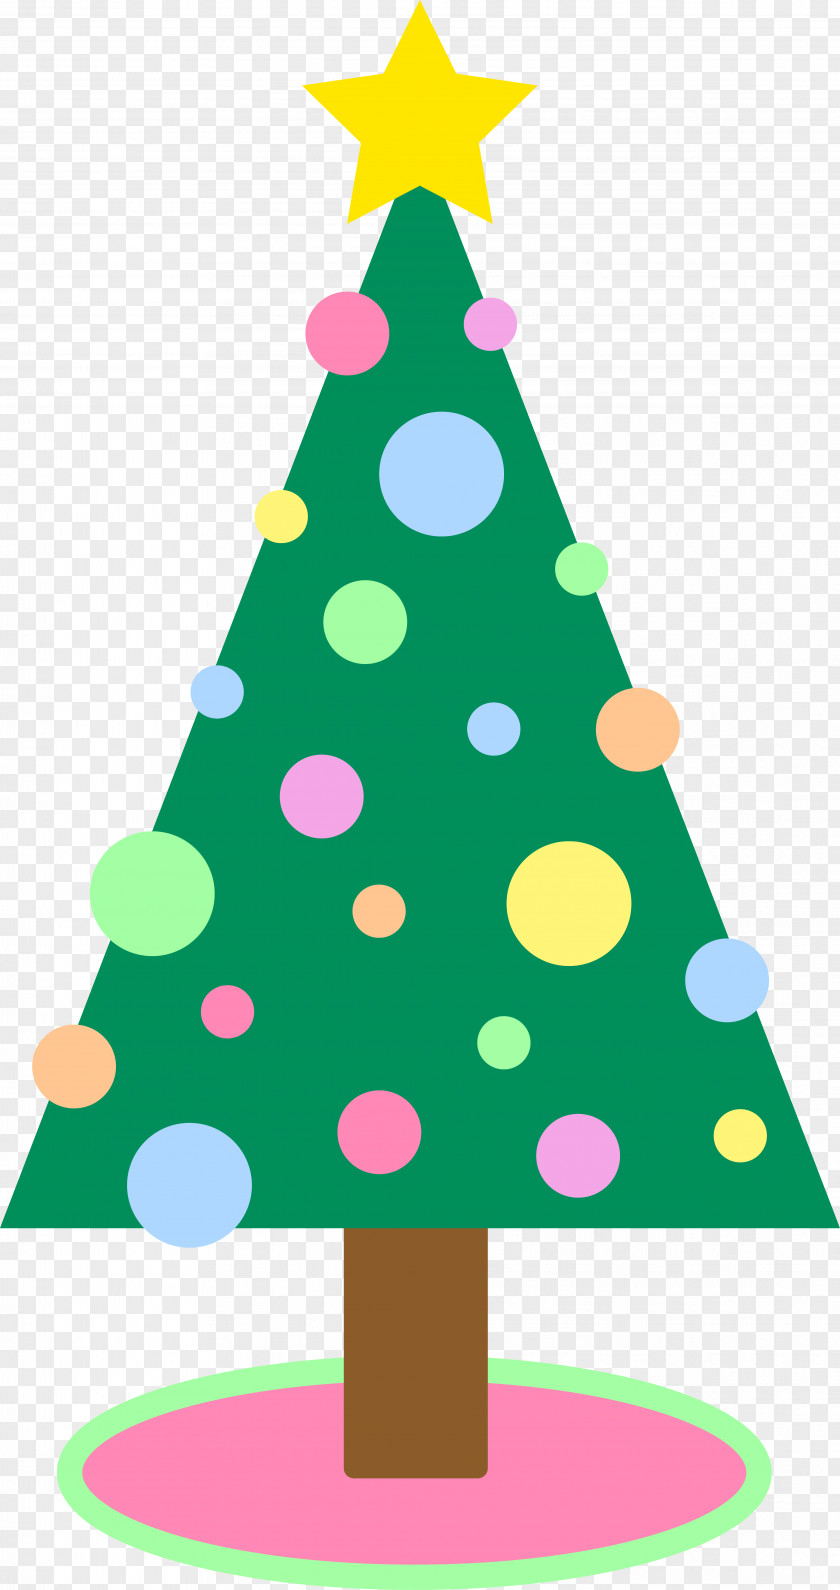 Cute Holiday Cliparts Santa Claus Christmas Tree Ornament Clip Art PNG